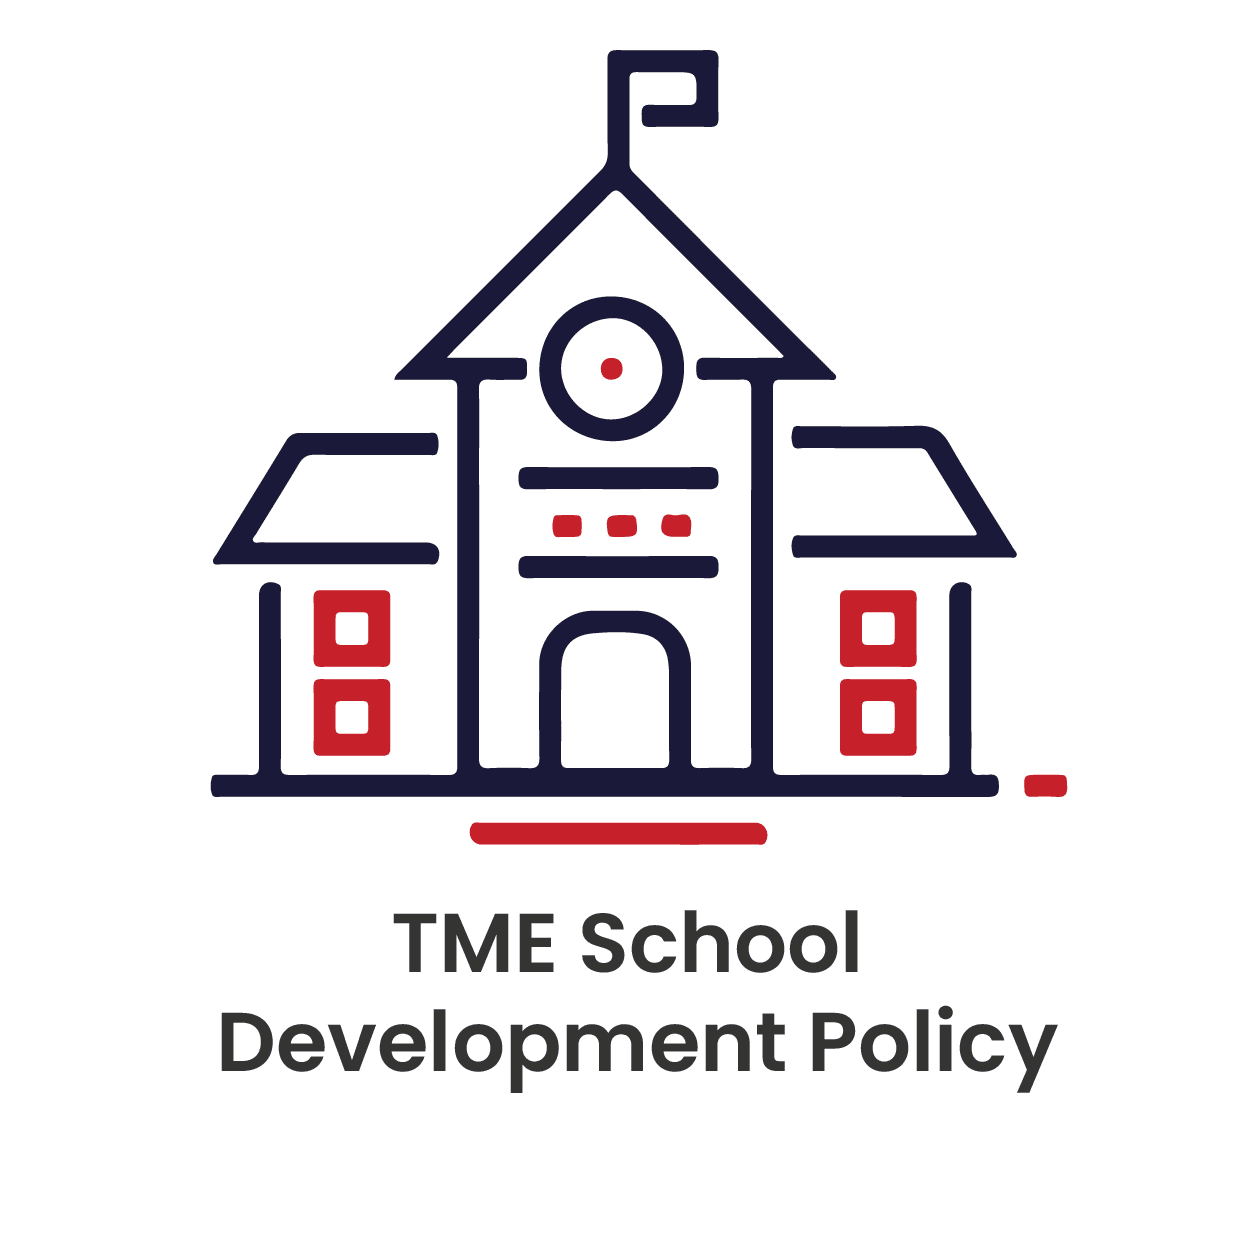 Roots Millennium contains Best School Development Policy